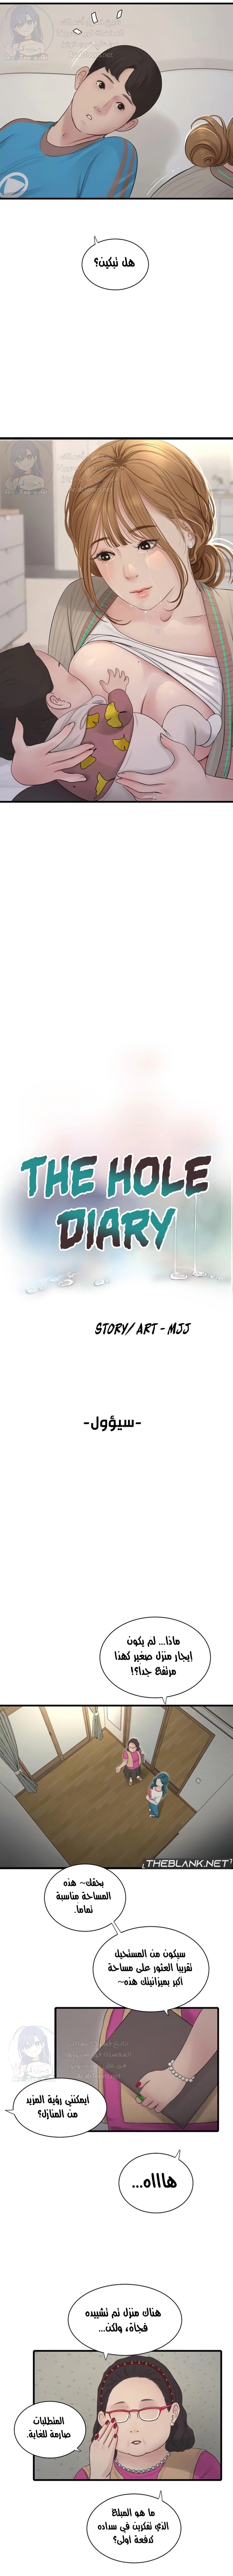 The Hole Diary - 27 - 66481cc9dabdc.webp